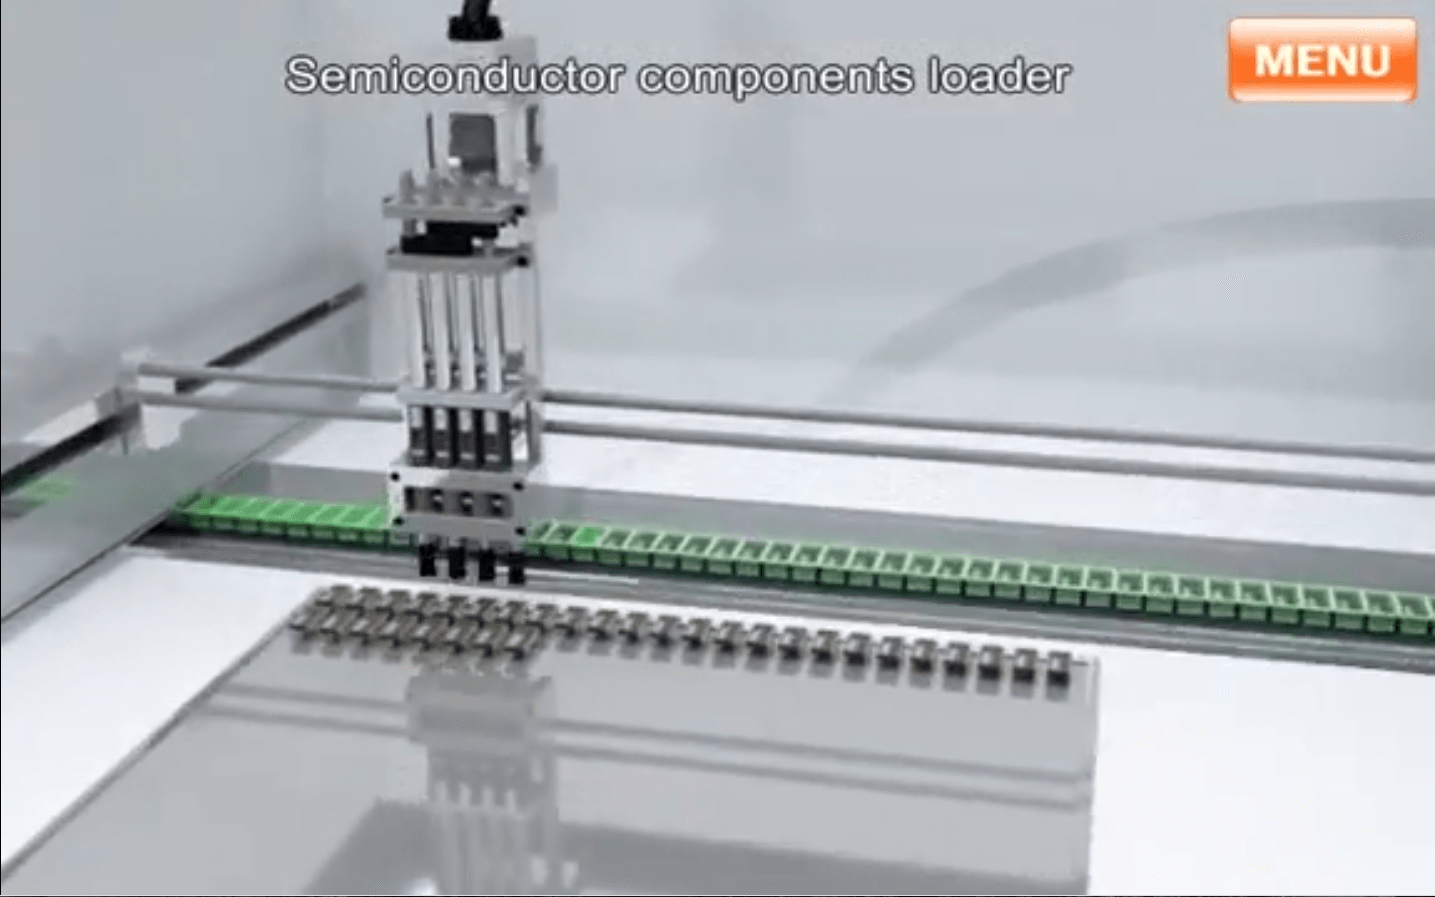 Pressure Sensor PSB Series - Semiconductor components loader